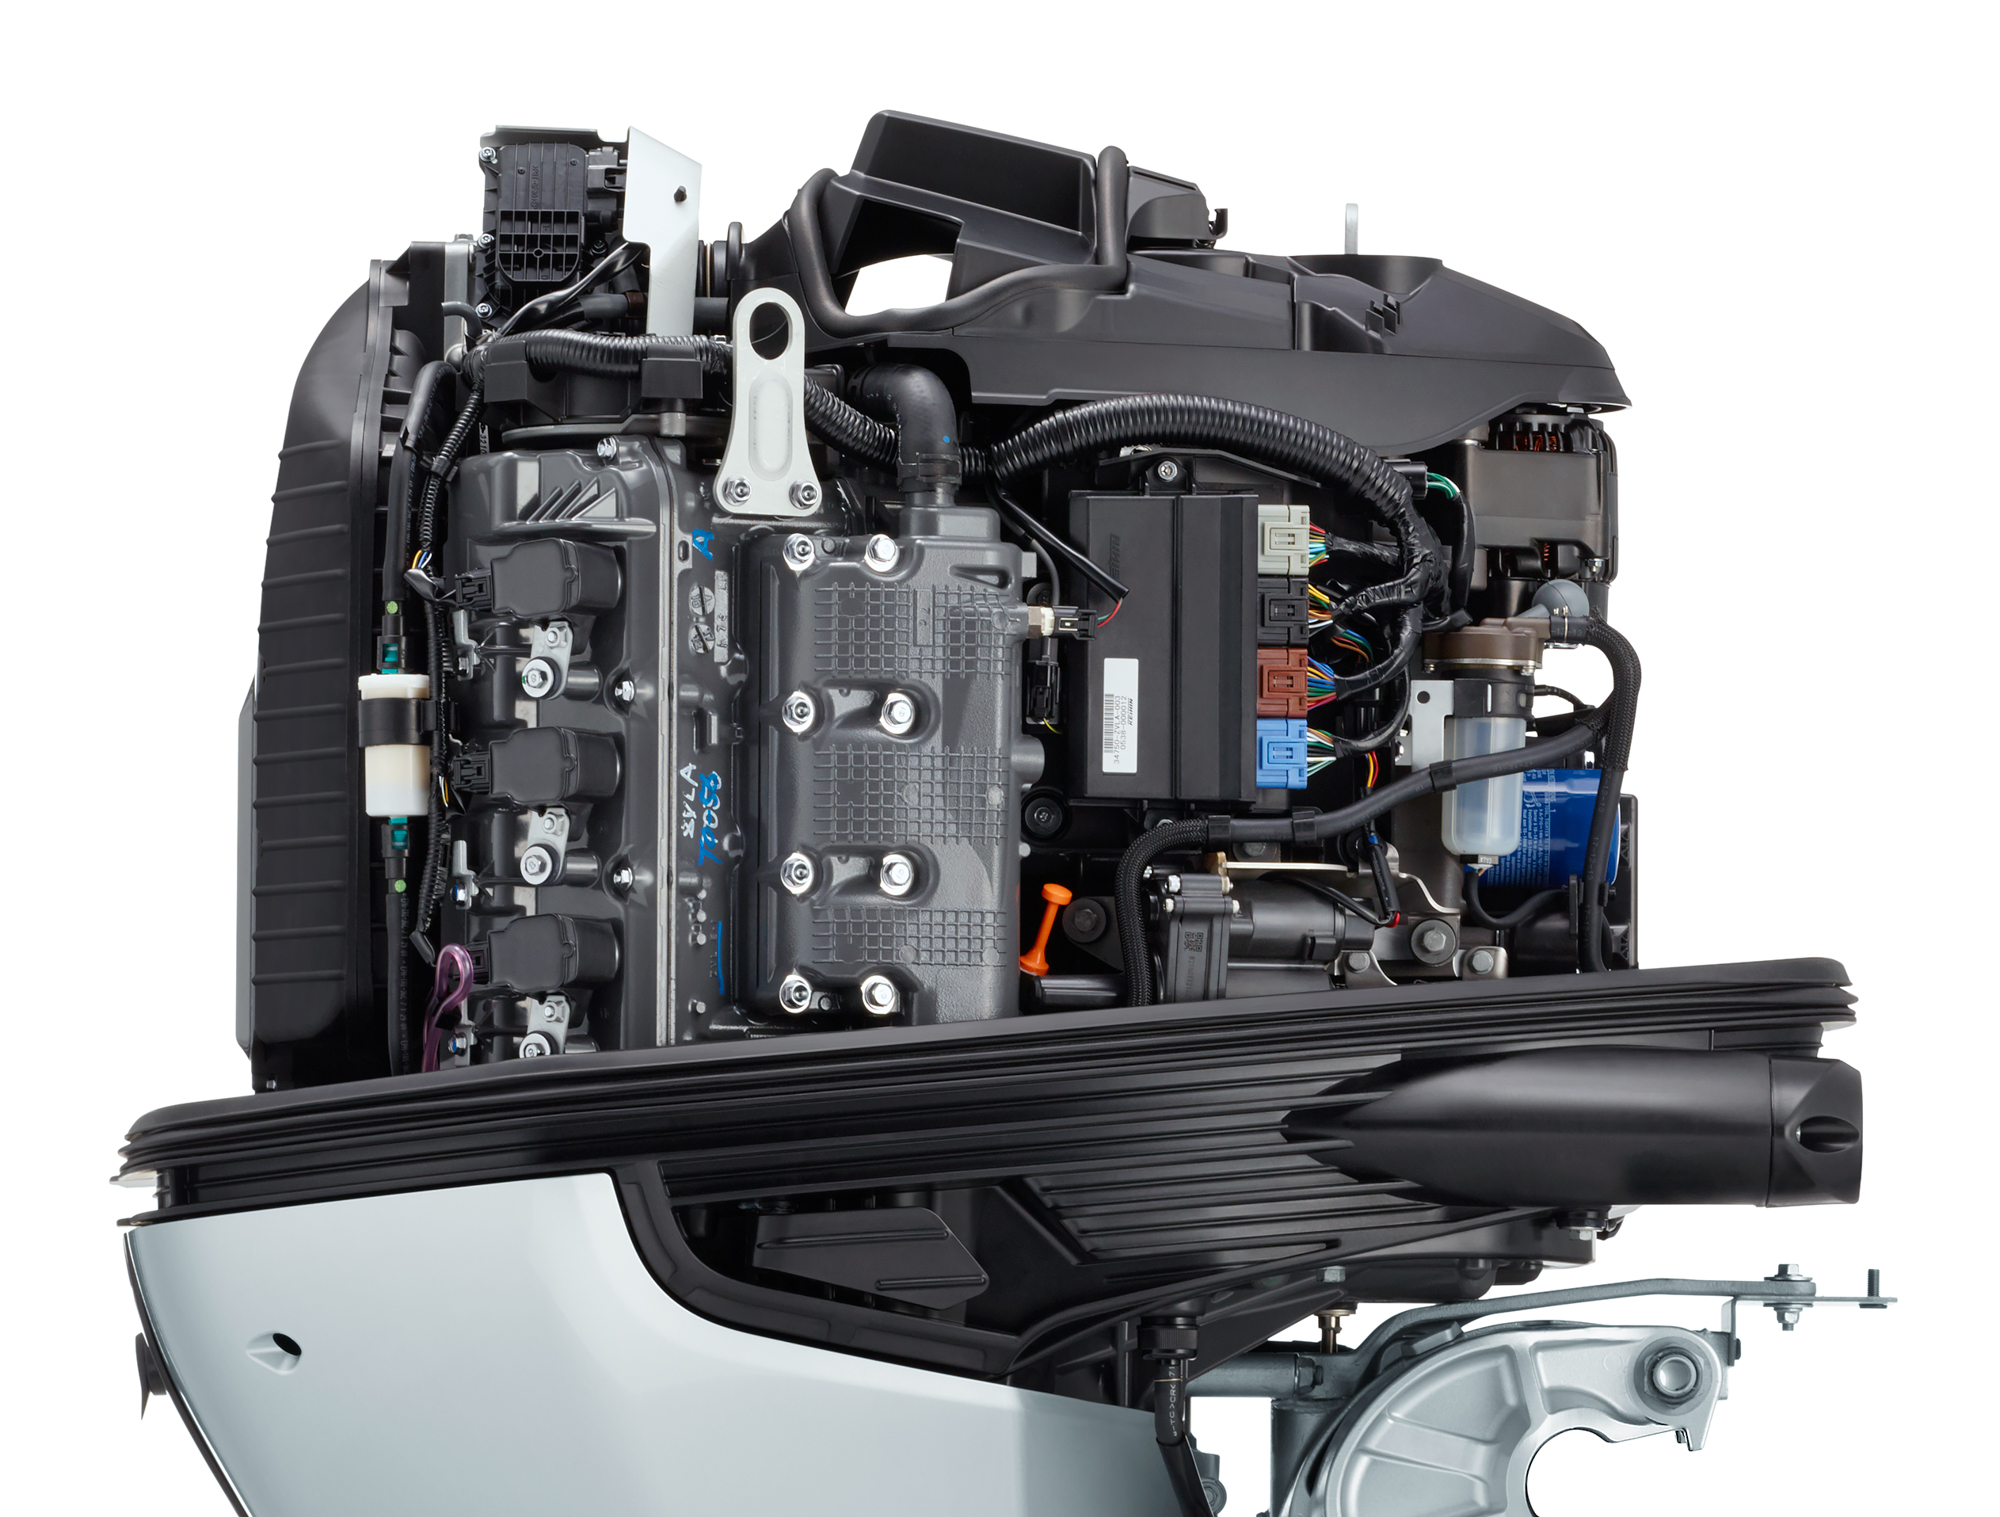 BF250DXDD 源自 Honda 旗艦車款 Legend 所搭載的 3.5L V6 引擎科技基礎。